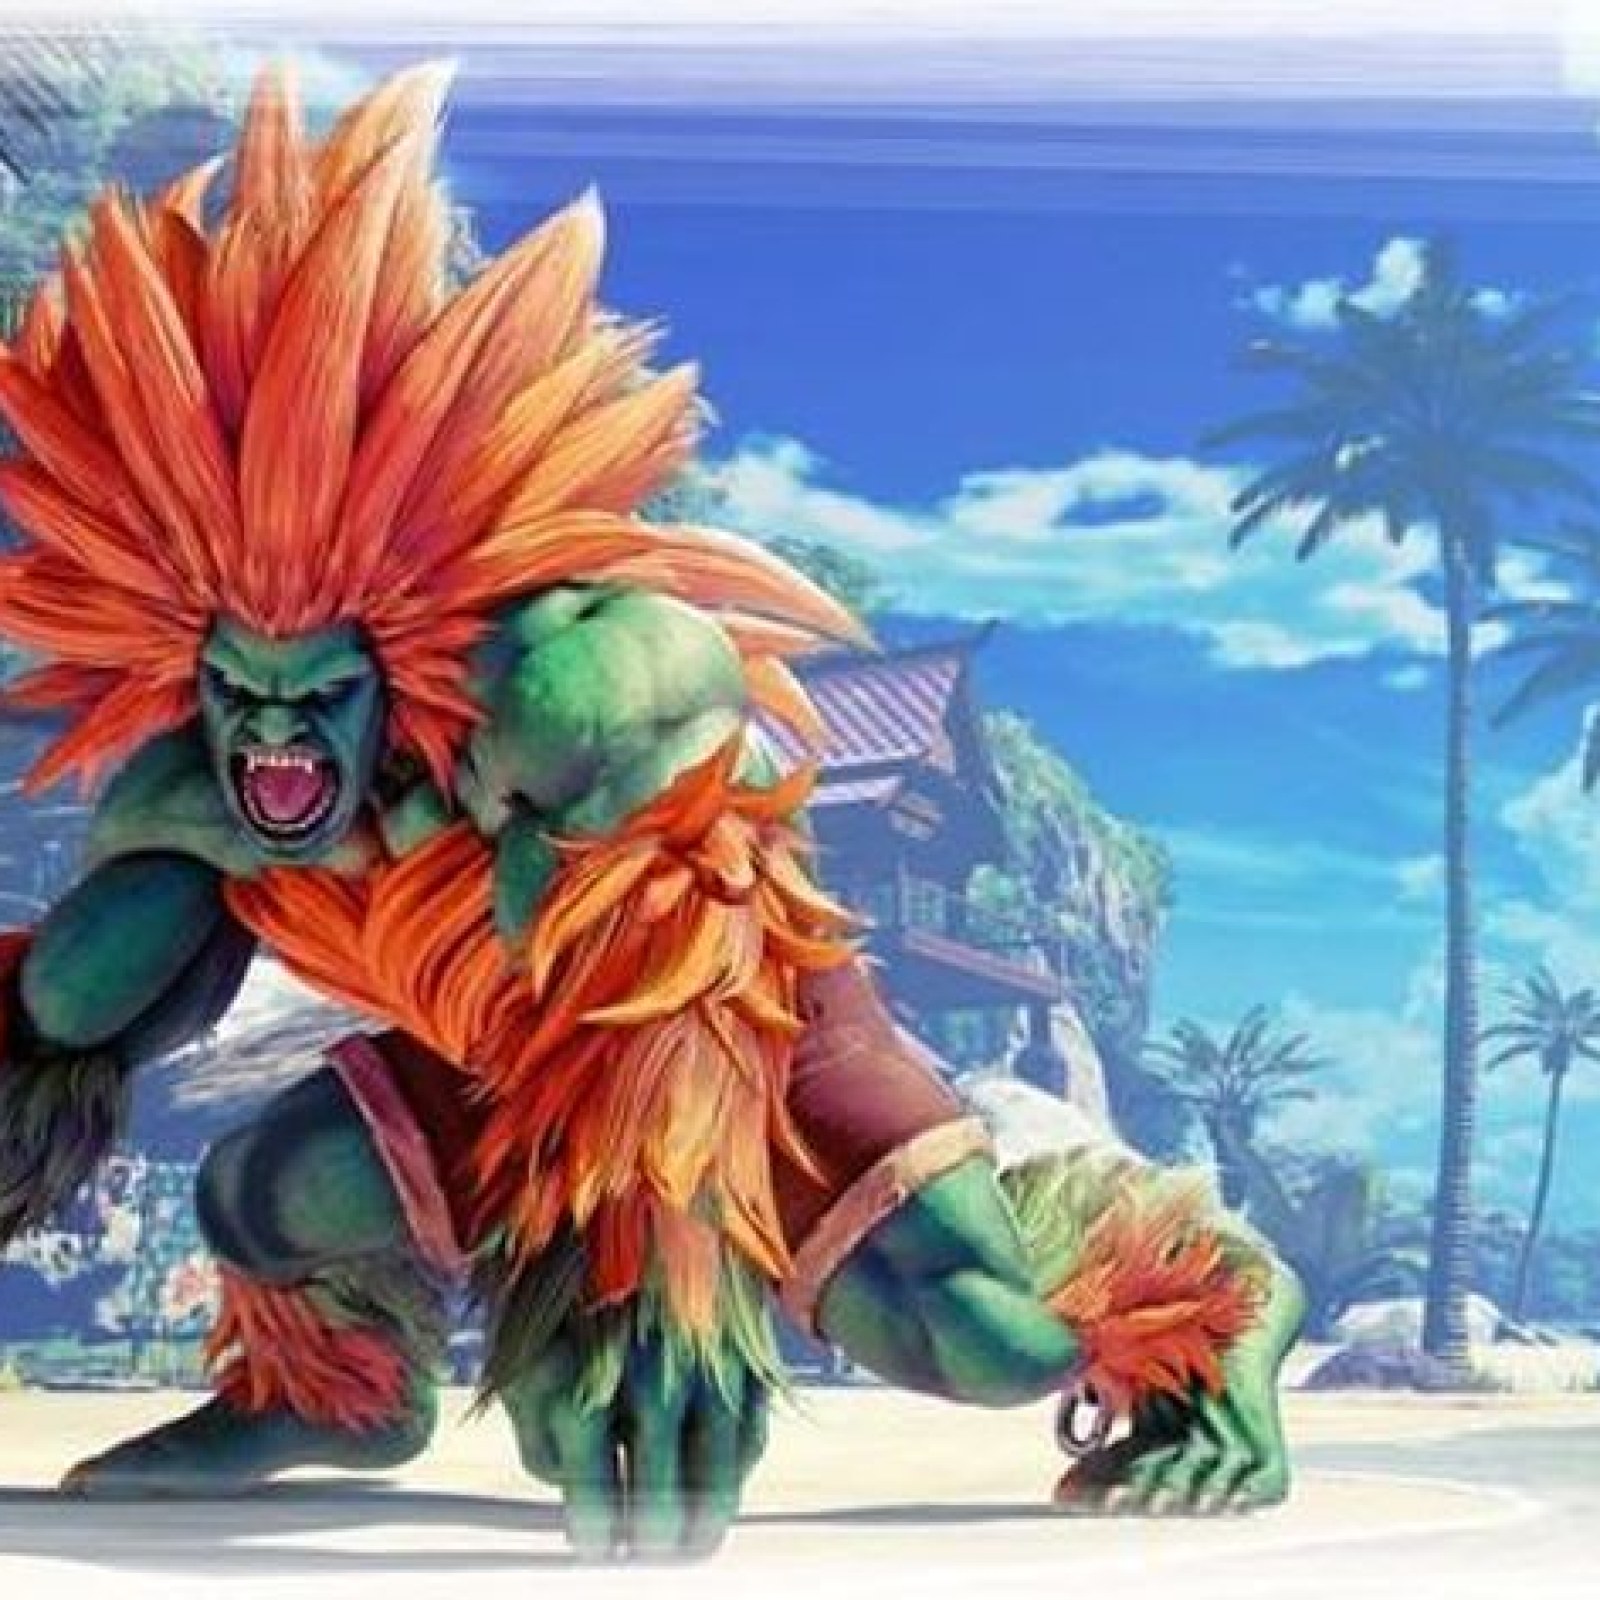 Street Fighter V: Arcade Edition – Blanka Gameplay Trailer